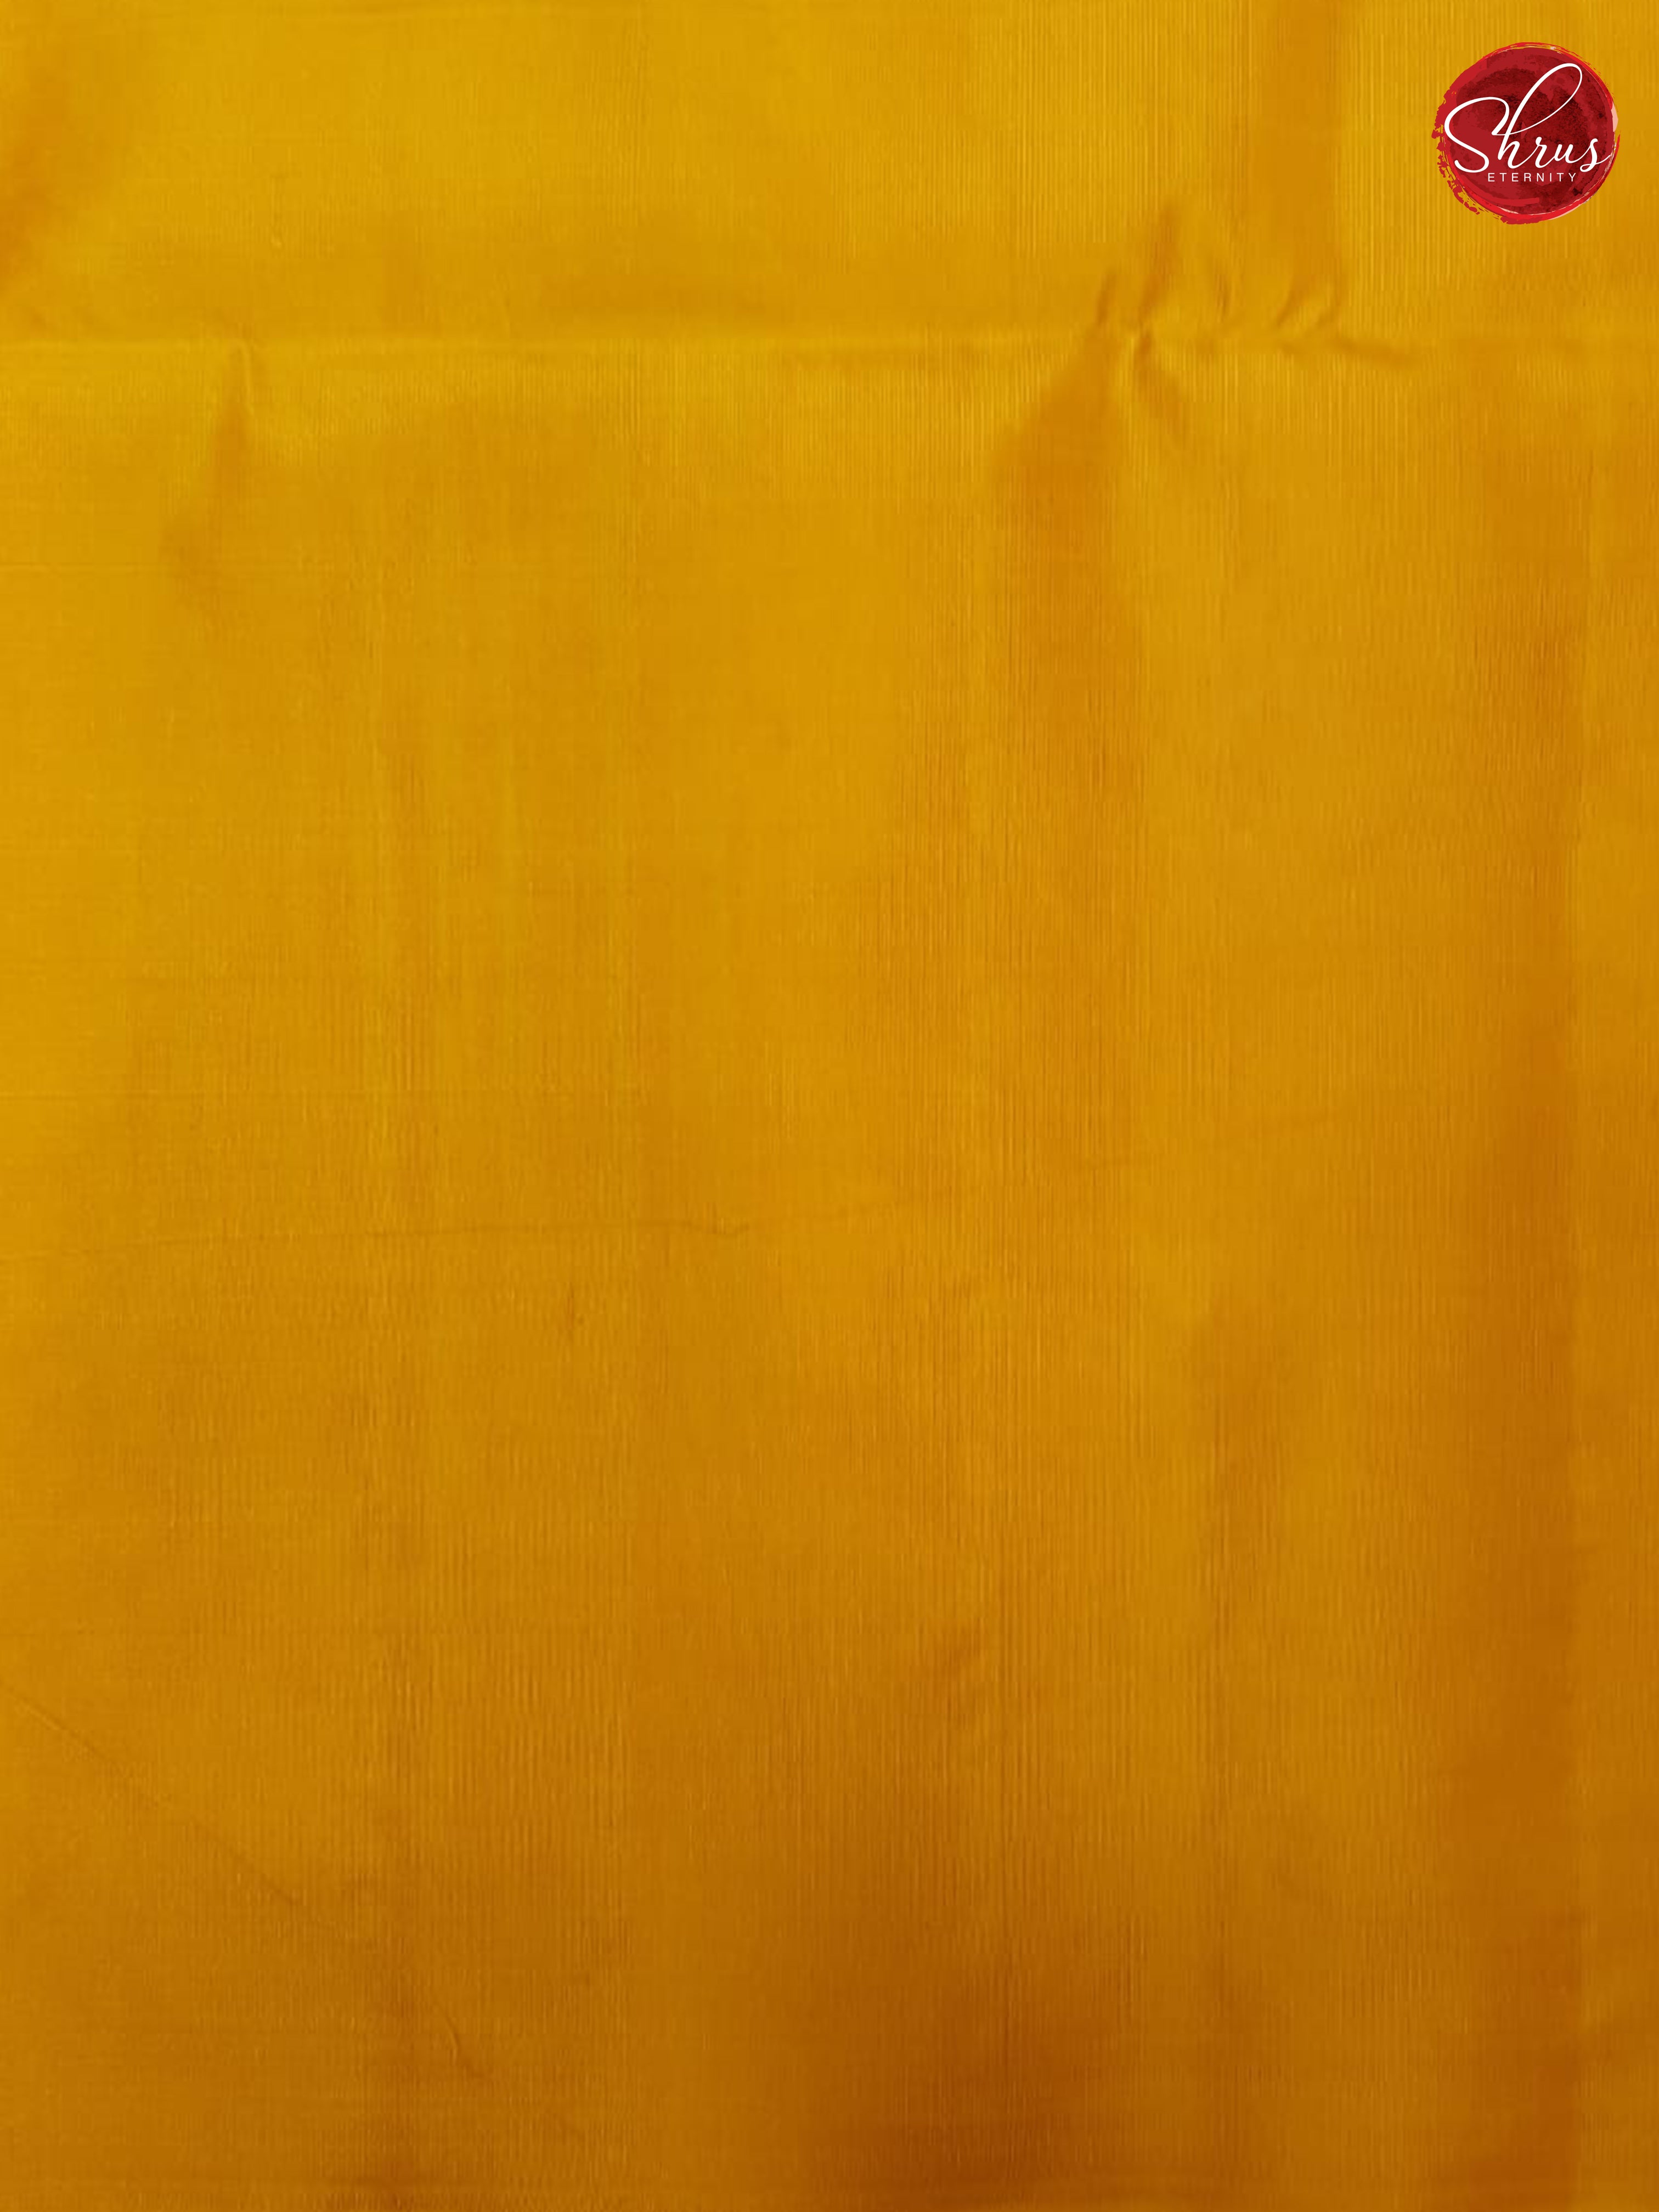 Red & Mustard - Soft Silk - Shop on ShrusEternity.com